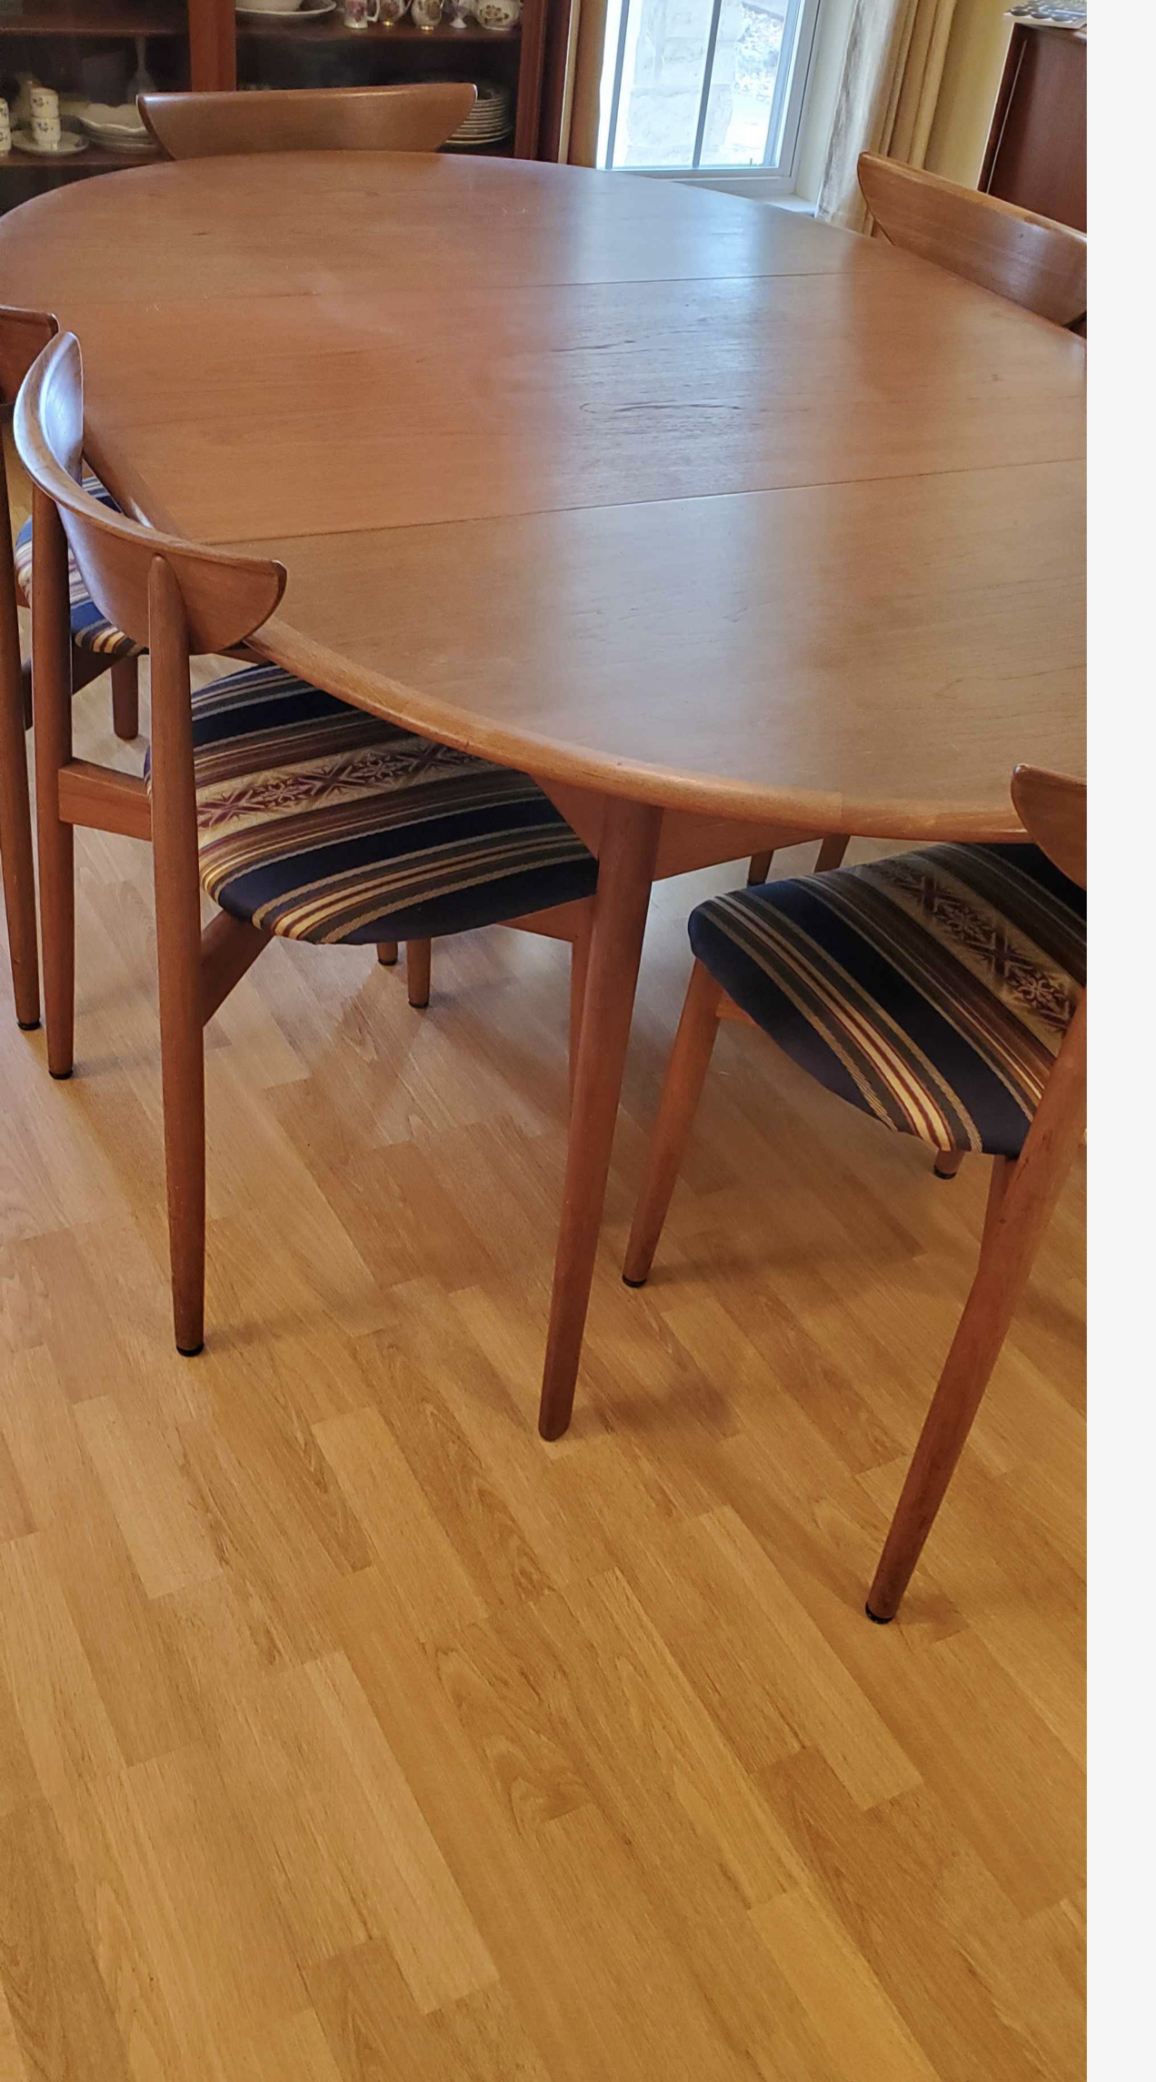 1652217531-tablechairs.jpeg